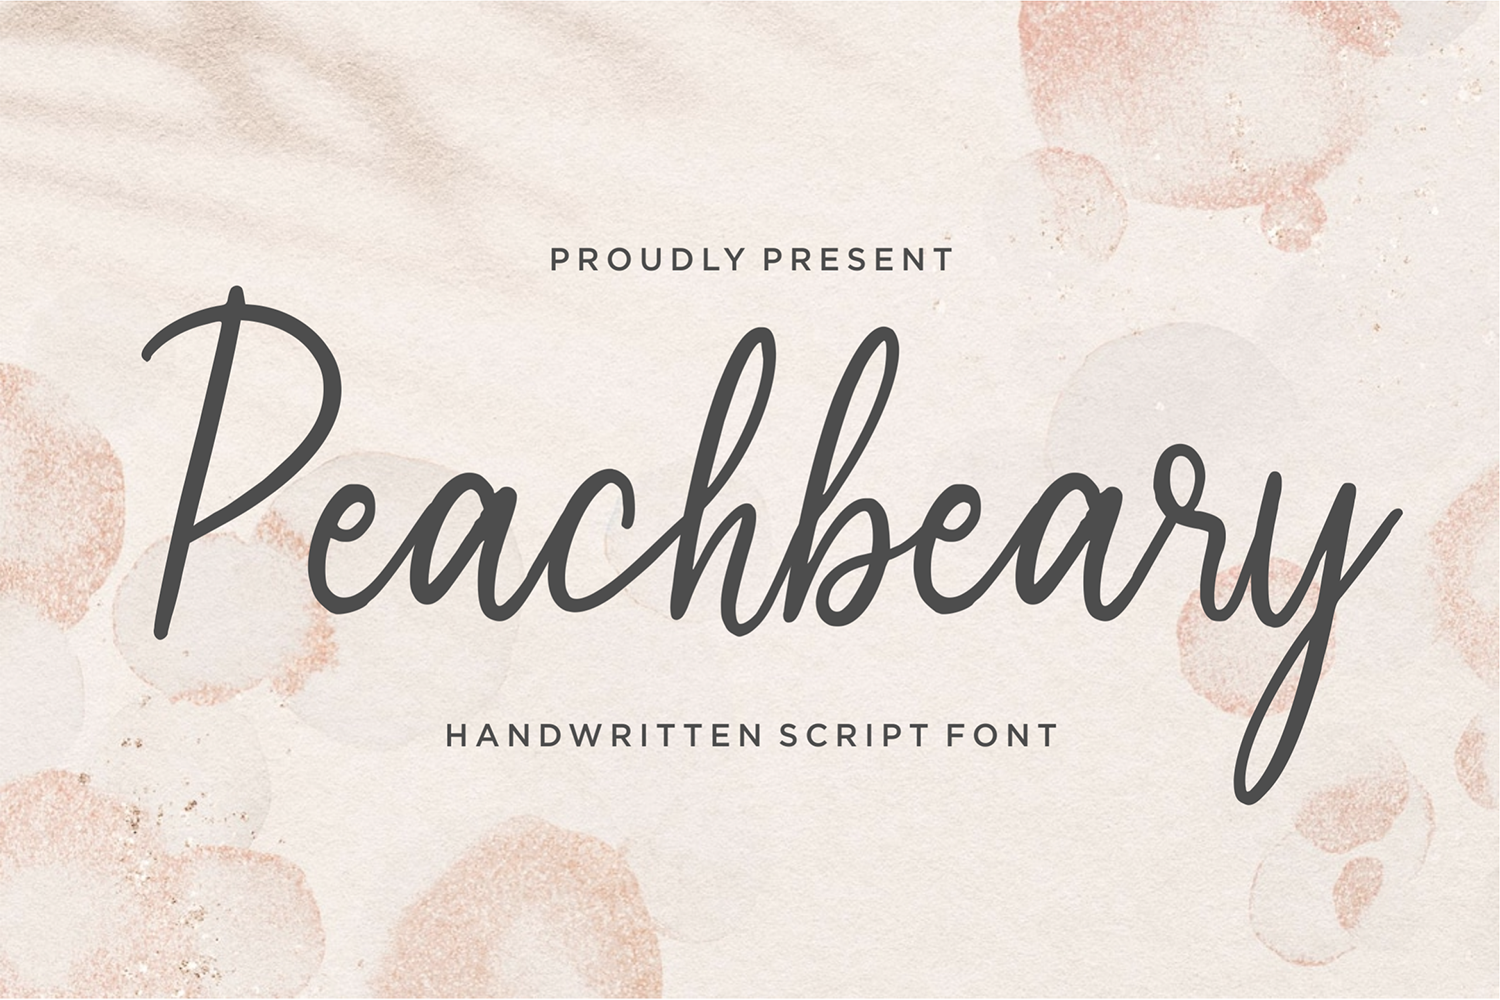 Peachbeary Free Font